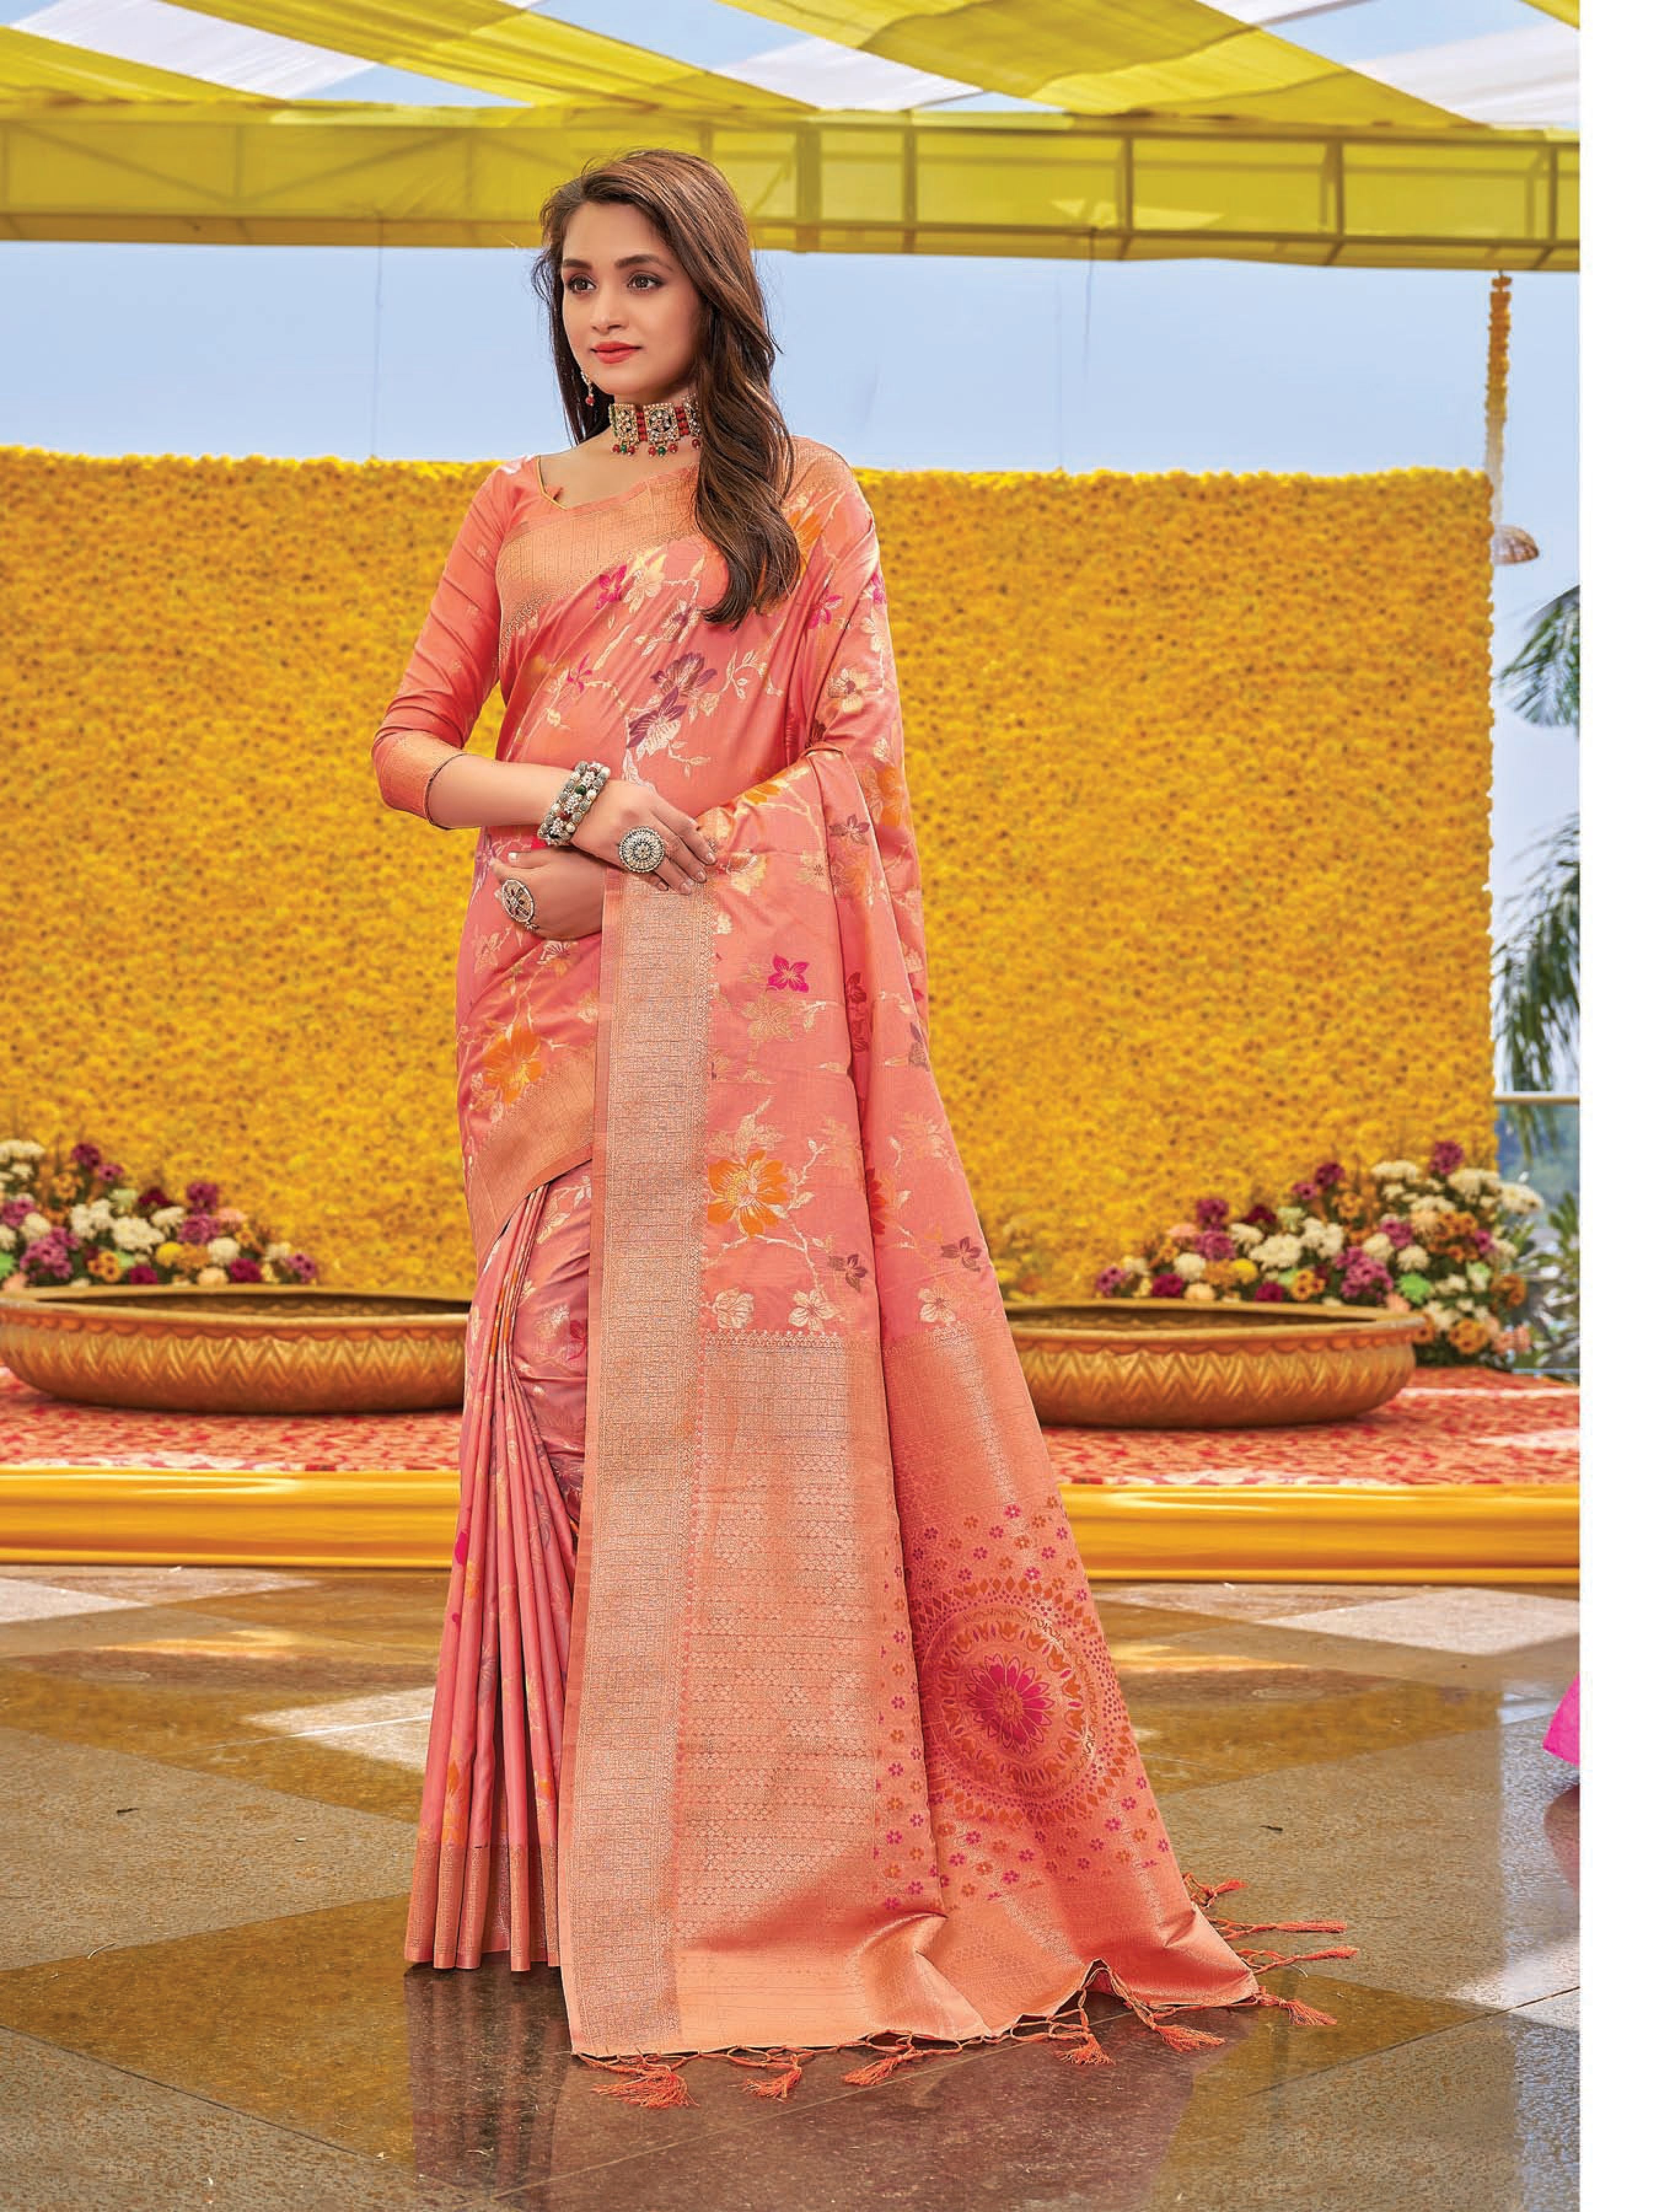 Buy Pink Wish Saree (saree for women 2019 sarees sarees under 500 latest sarees  under 200 latest sarees collection 2019 under 500) YH at Amazon.in